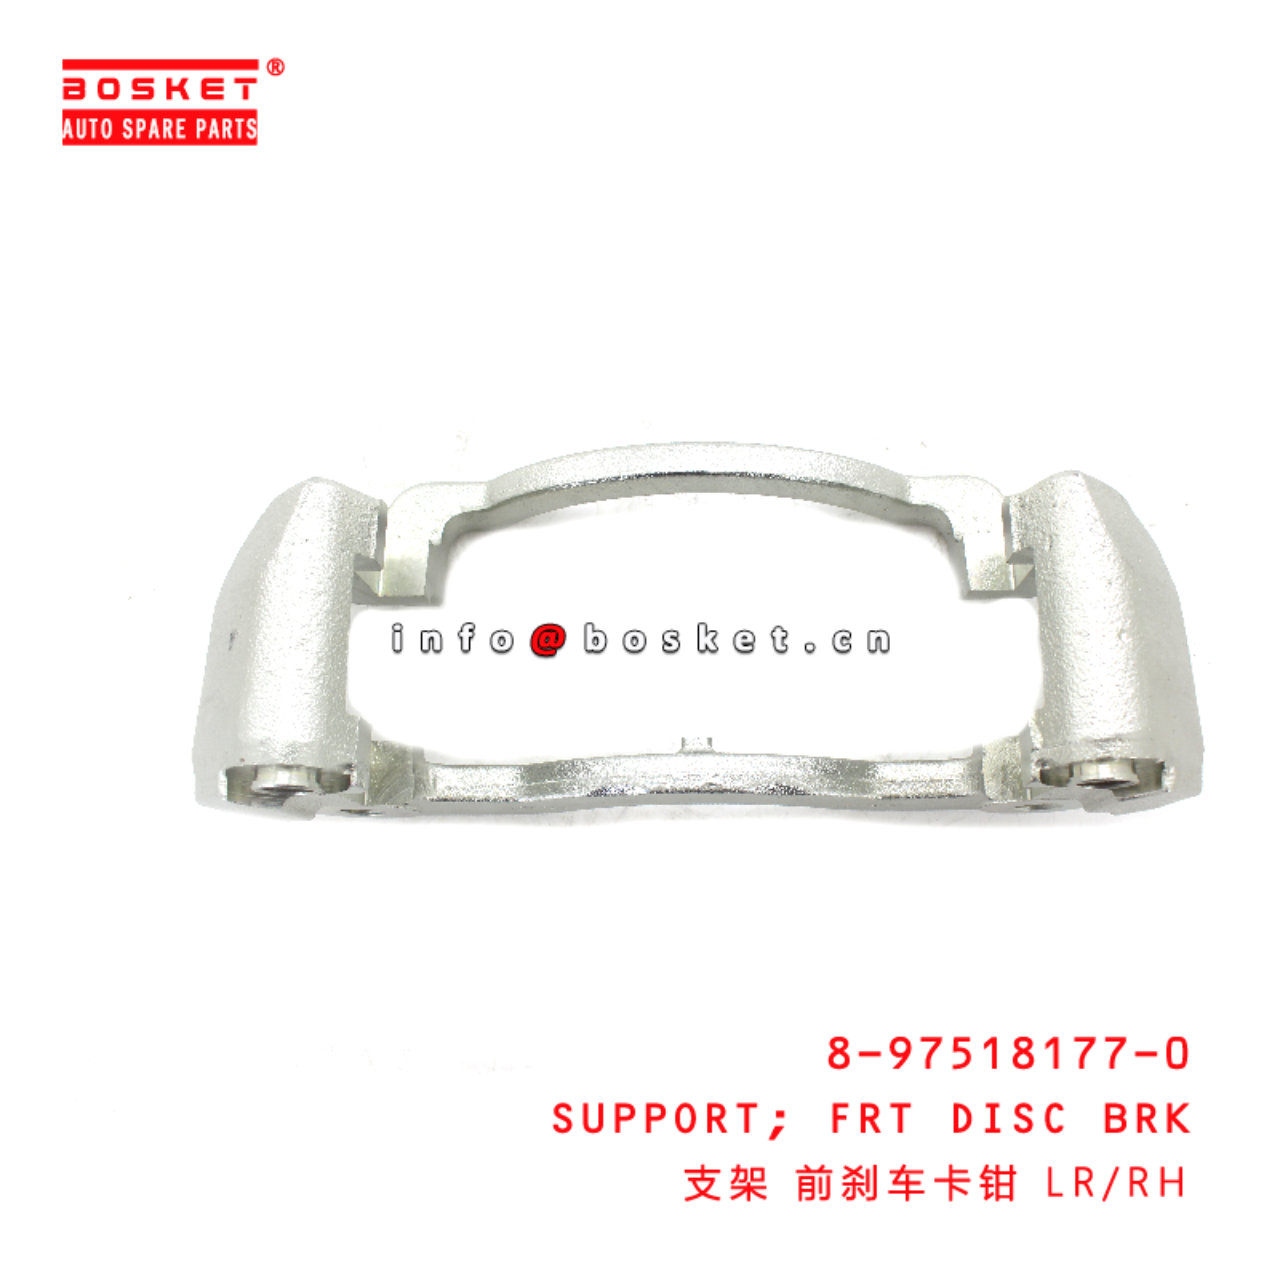 8-97518177-0 Front Disc Brake Support suitable for ISUZU NPR  8975181770